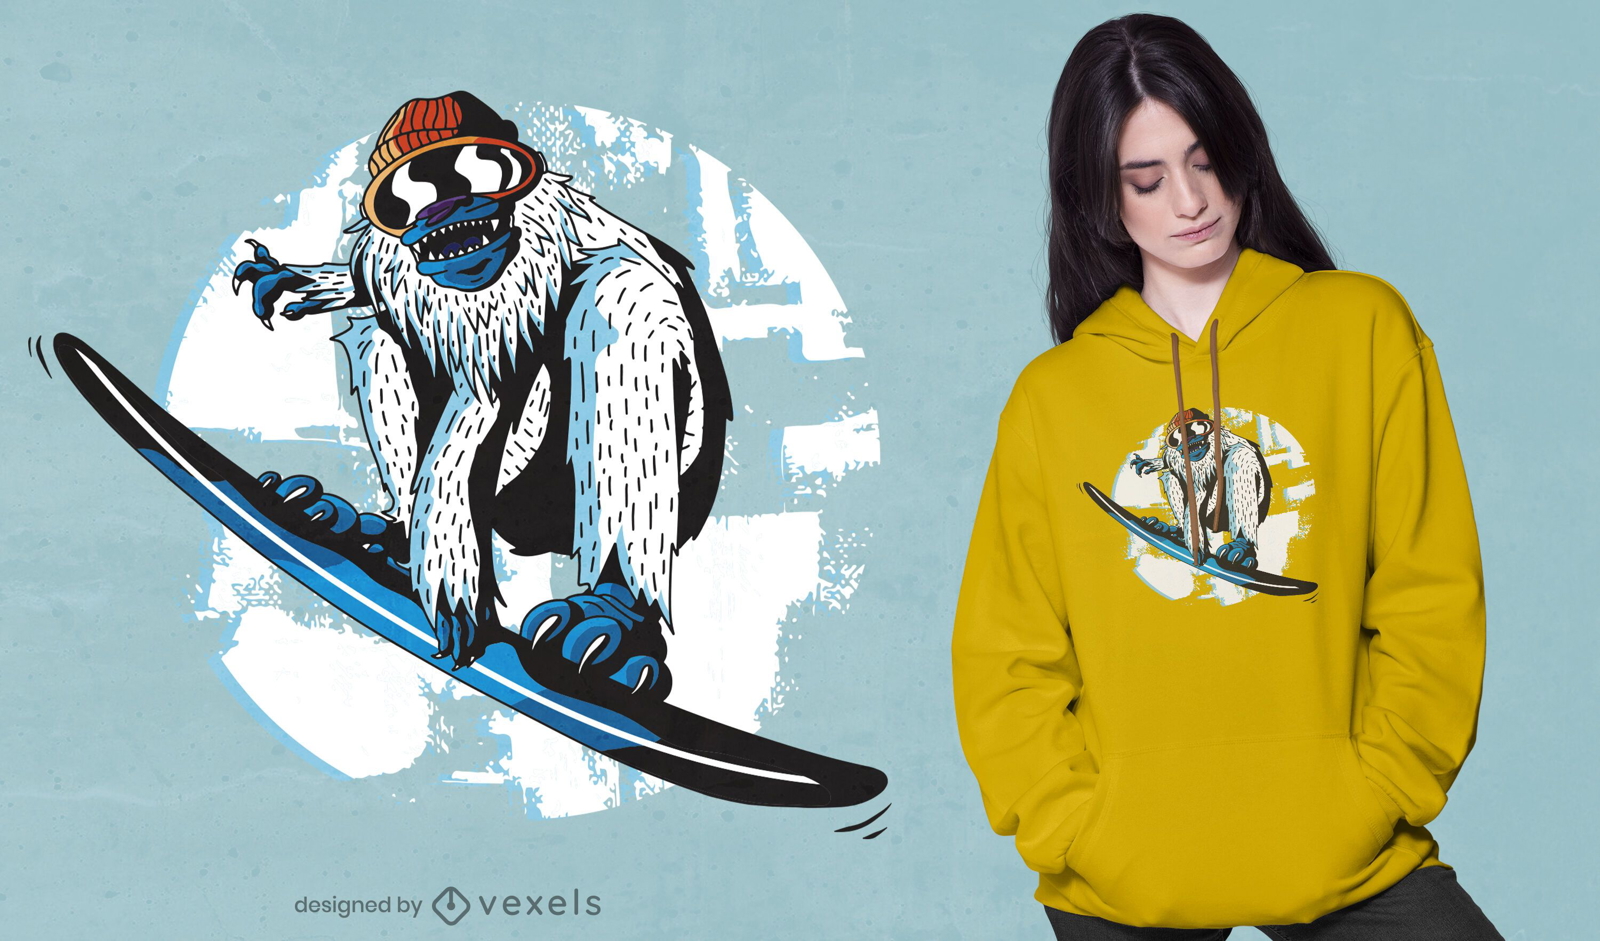 Snowboarding yeti t-shirt design